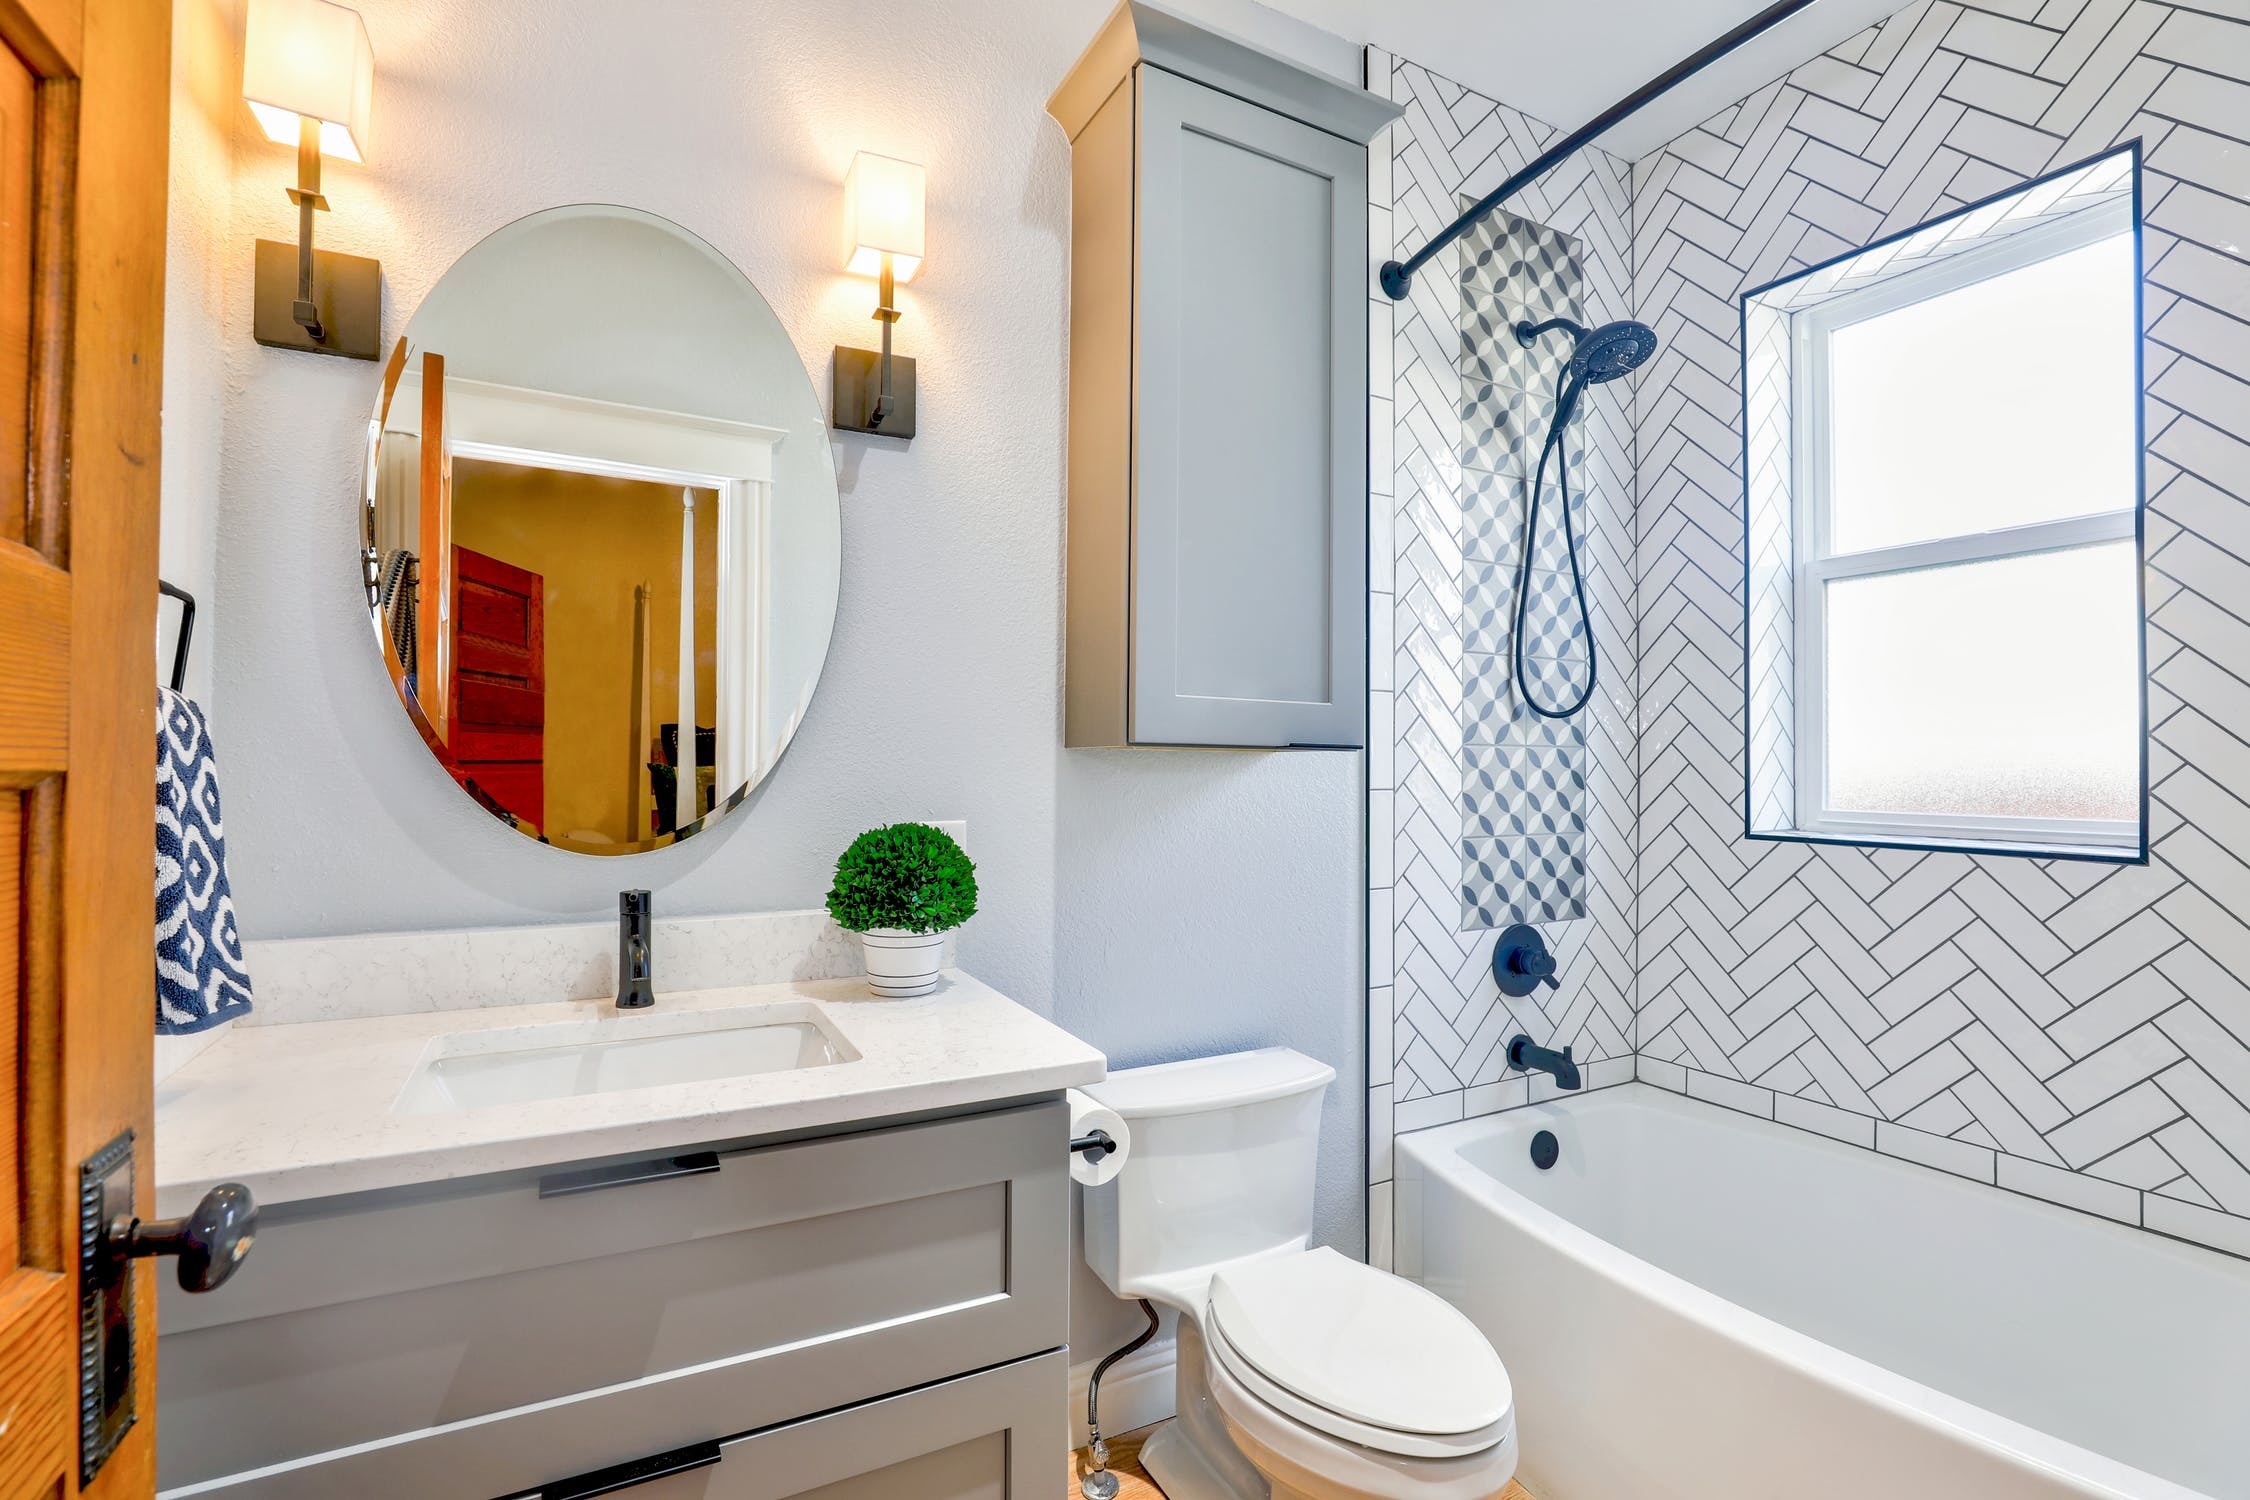 4 Unique Tile Designs To Consider For A Bathroom Renovation